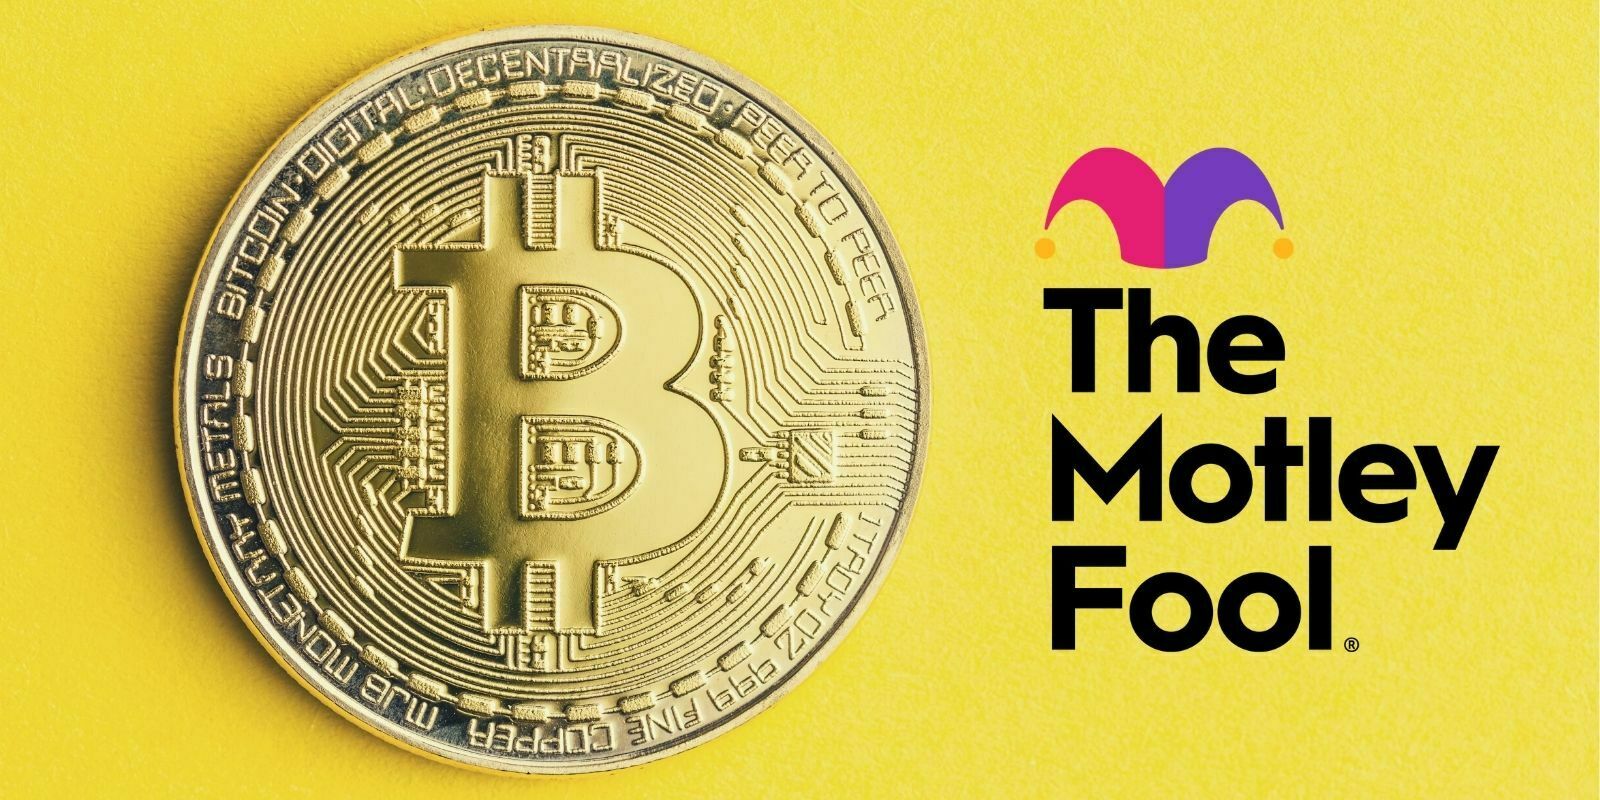 The Motley Fool investit 5 millions de dollars de son capital dans le Bitcoin (BTC)